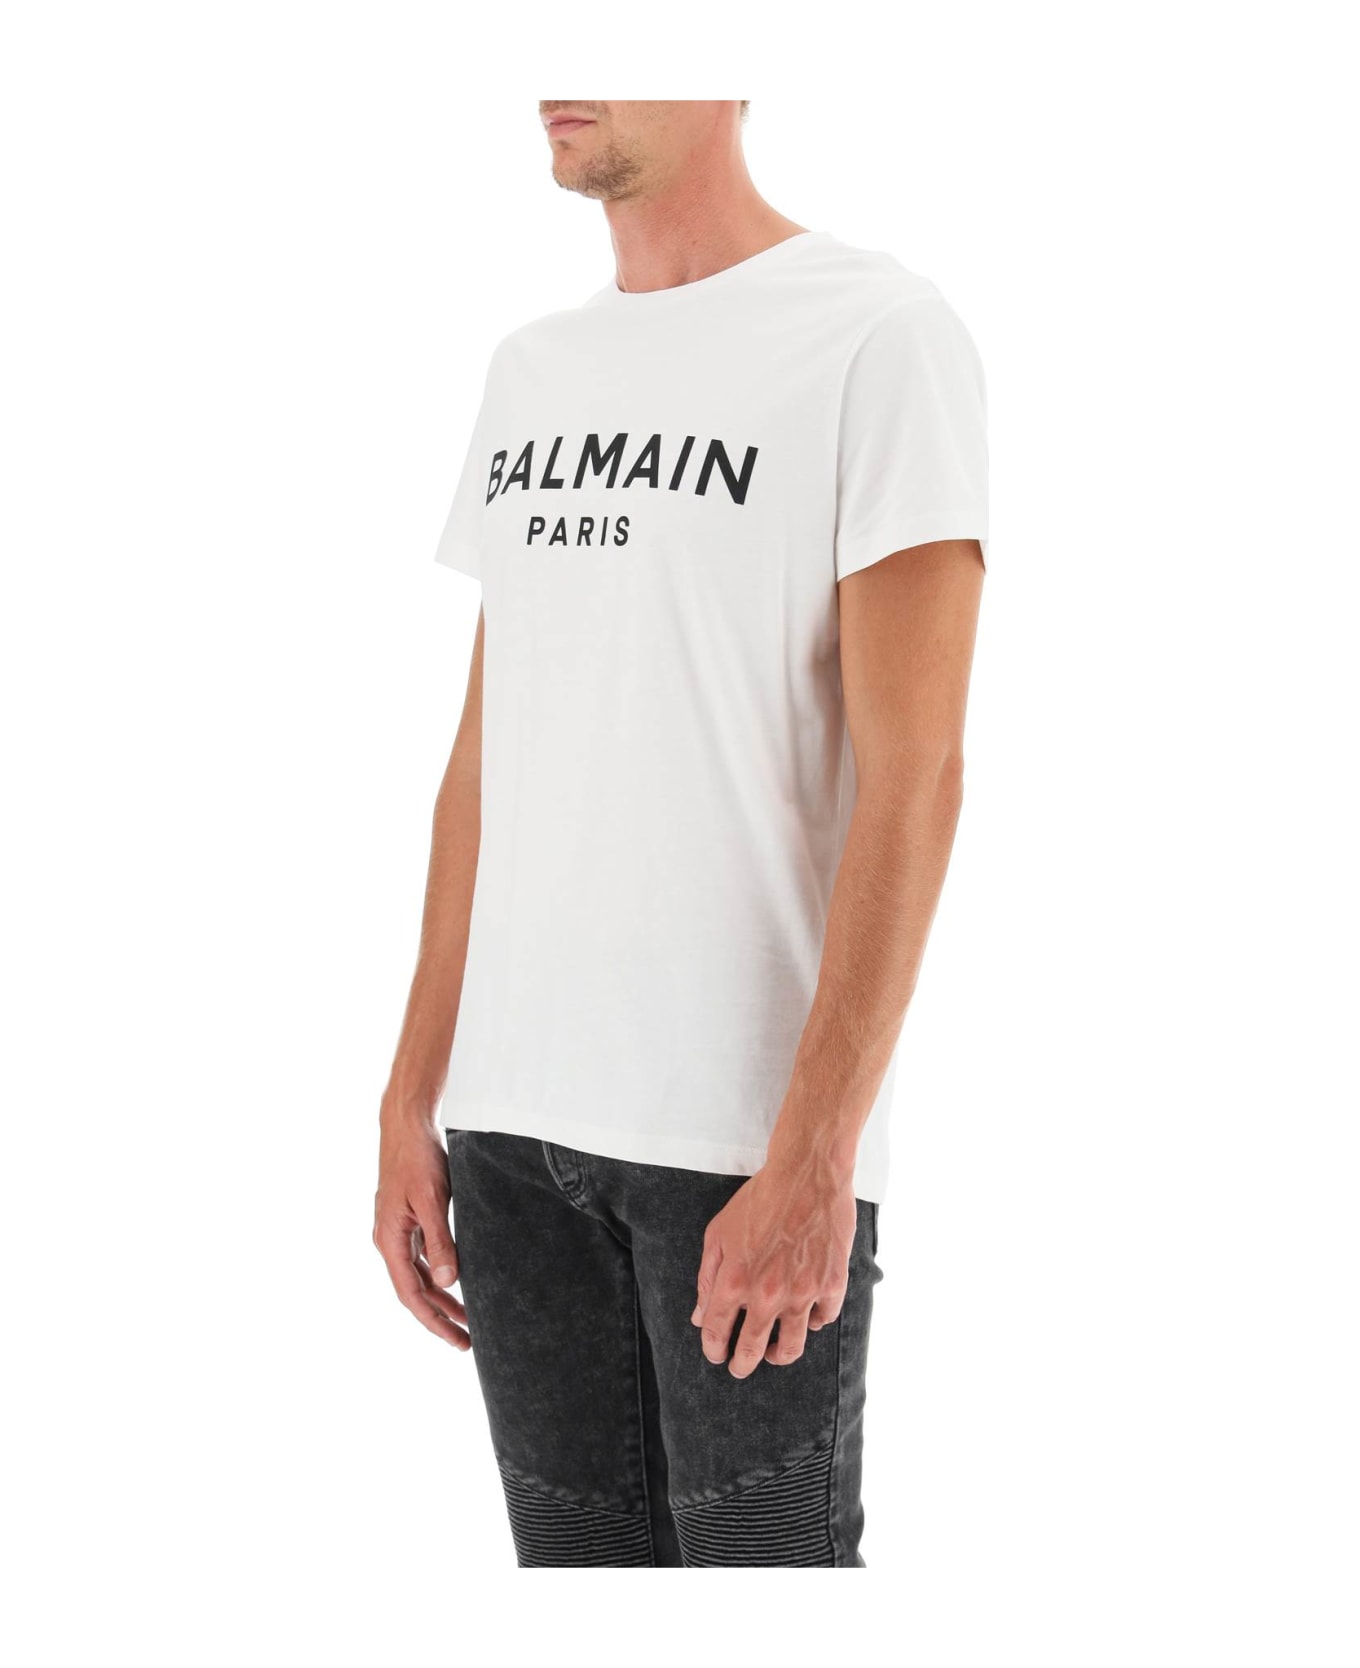 Balmain Logo Print T-shirt - BLANC NOIR (White)